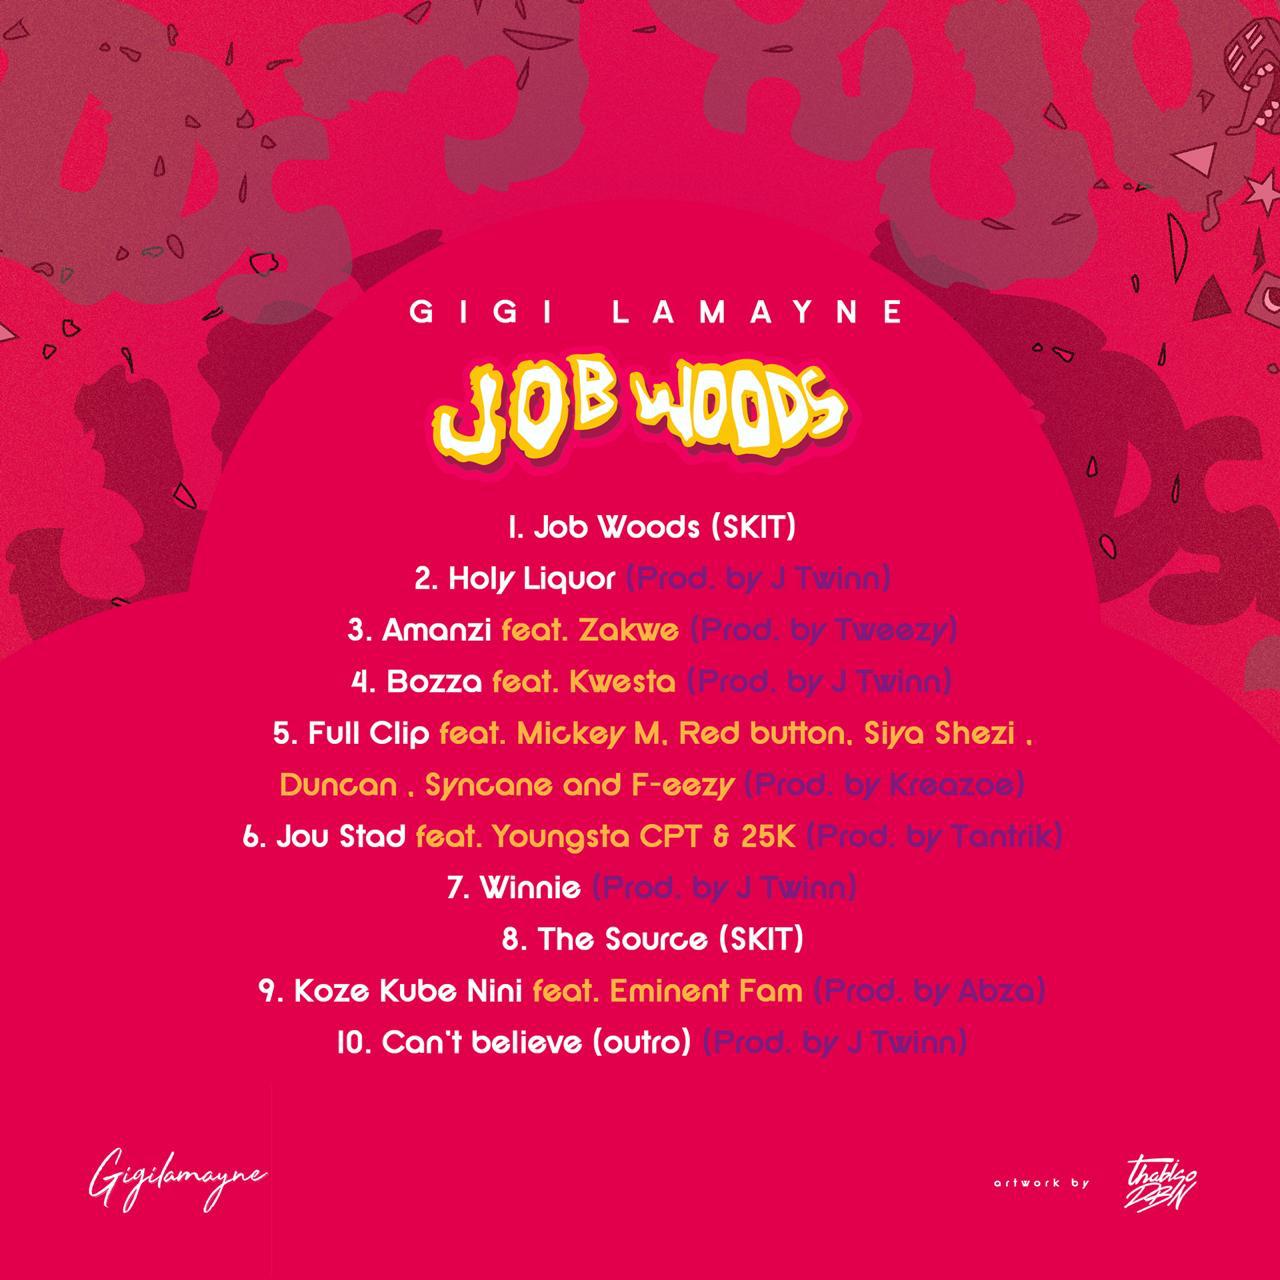 Gigi Lamayne - Job Woods Album Tracklist.jpg